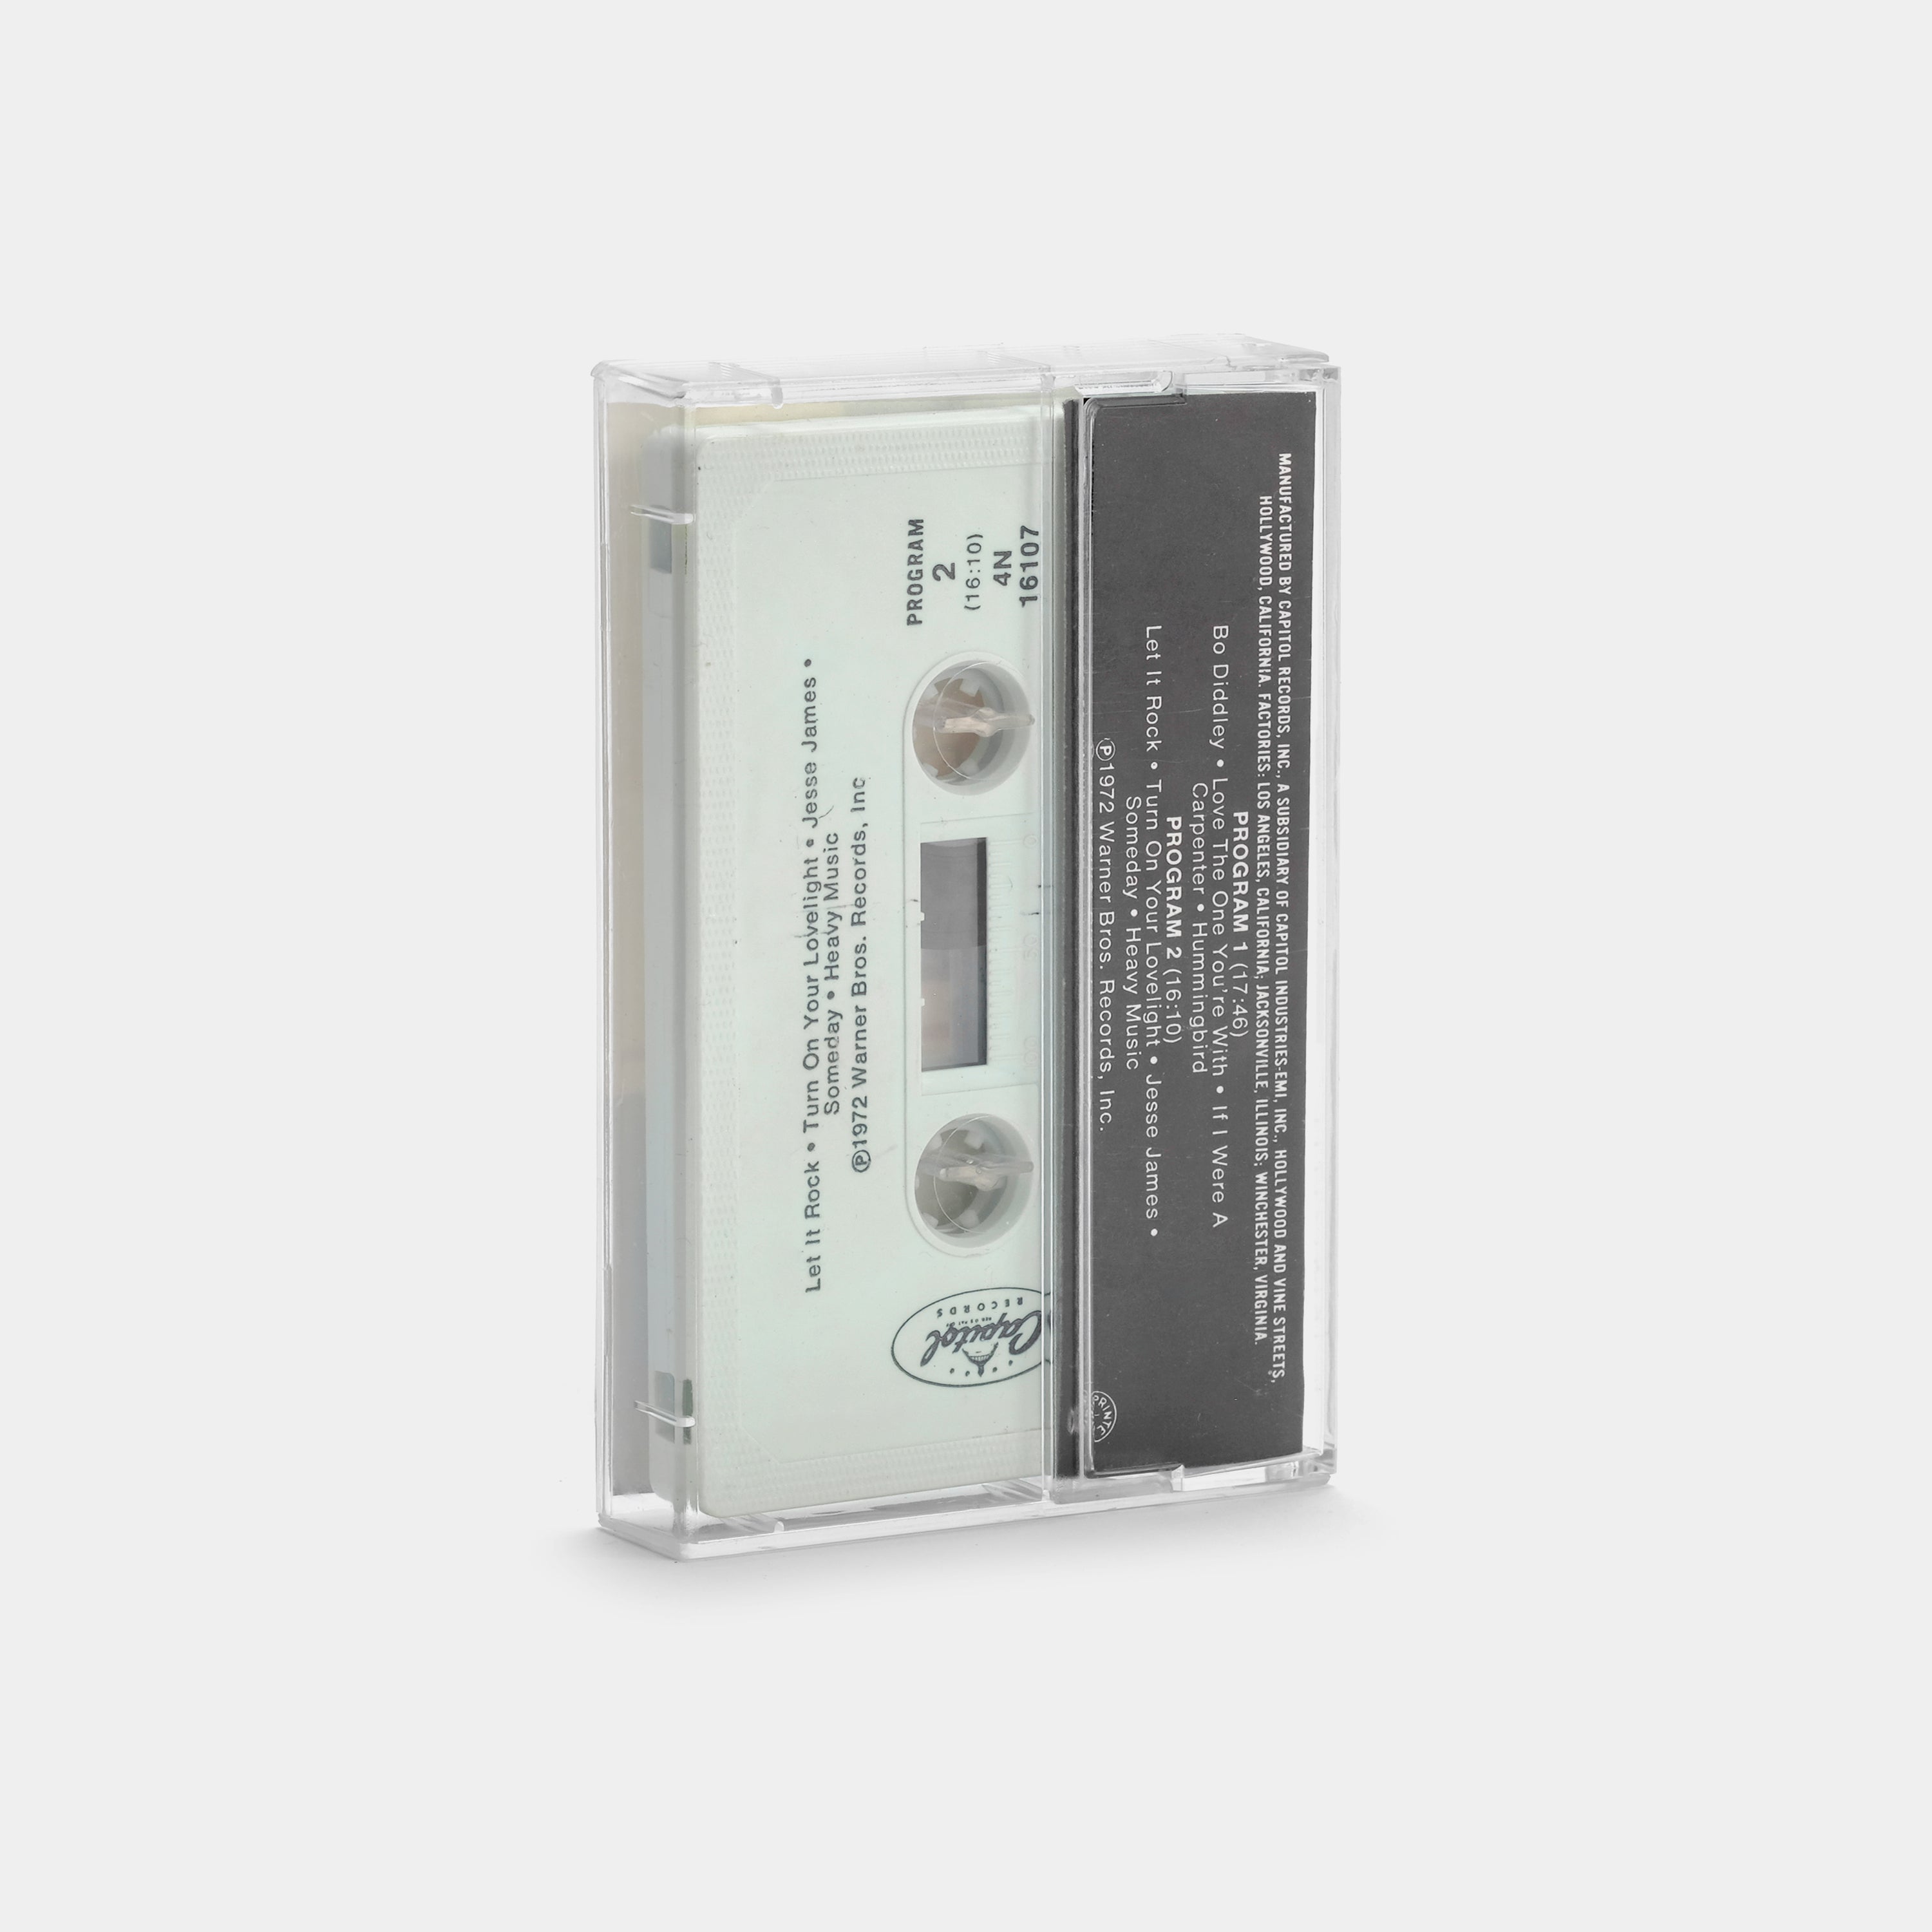 Bob Seger - Smokin' O.P.'S Cassette Tape